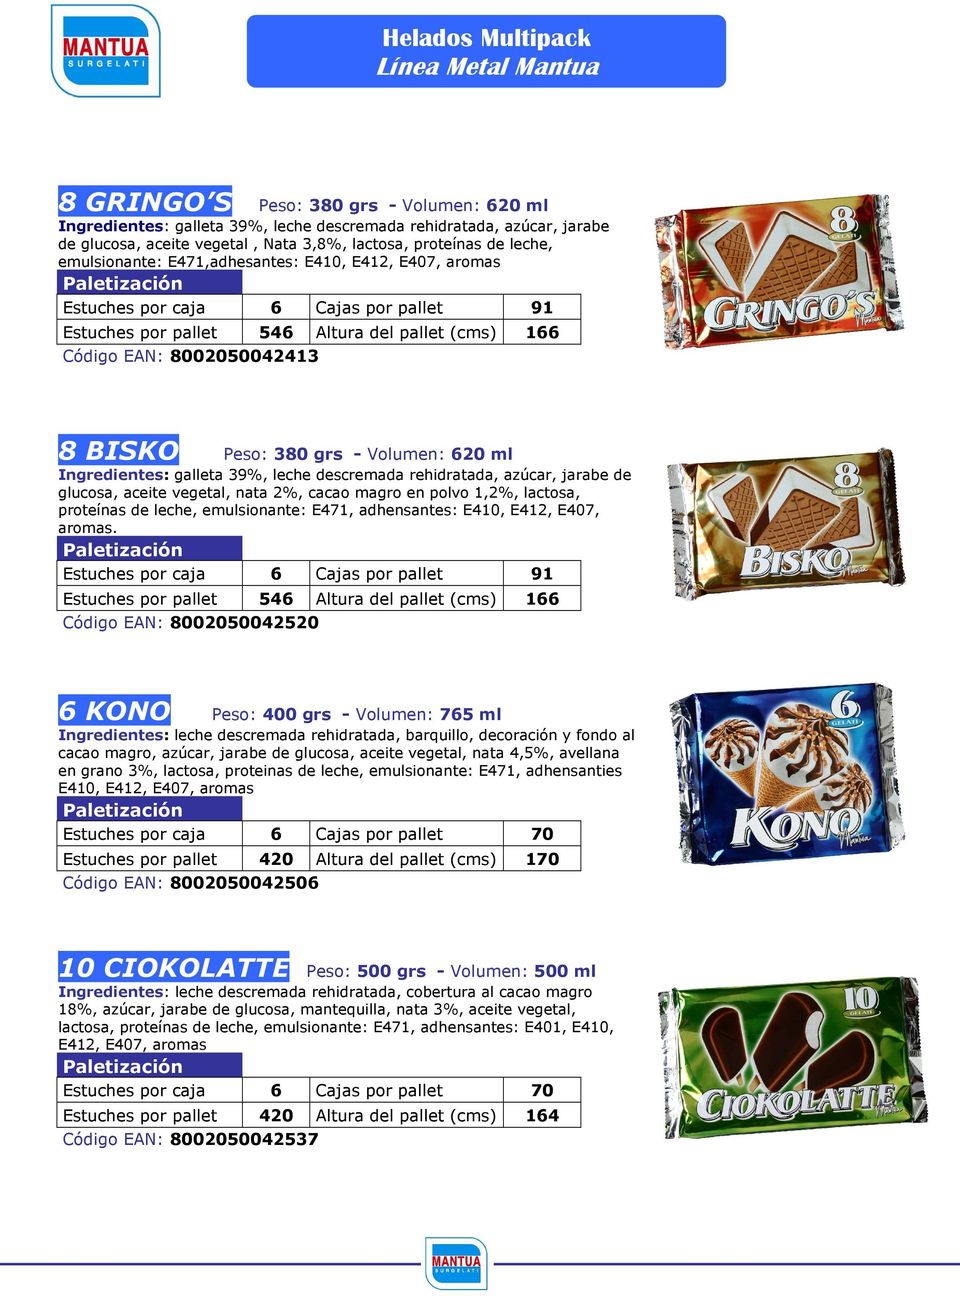 BISKO Peso: 380 grs - Volumen: 620 ml Ingredientes: galleta 39%, leche descremada rehidratada, azúcar, jarabe de glucosa, aceite vegetal, nata 2%, cacao magro en polvo 1,2%, lactosa, proteínas de